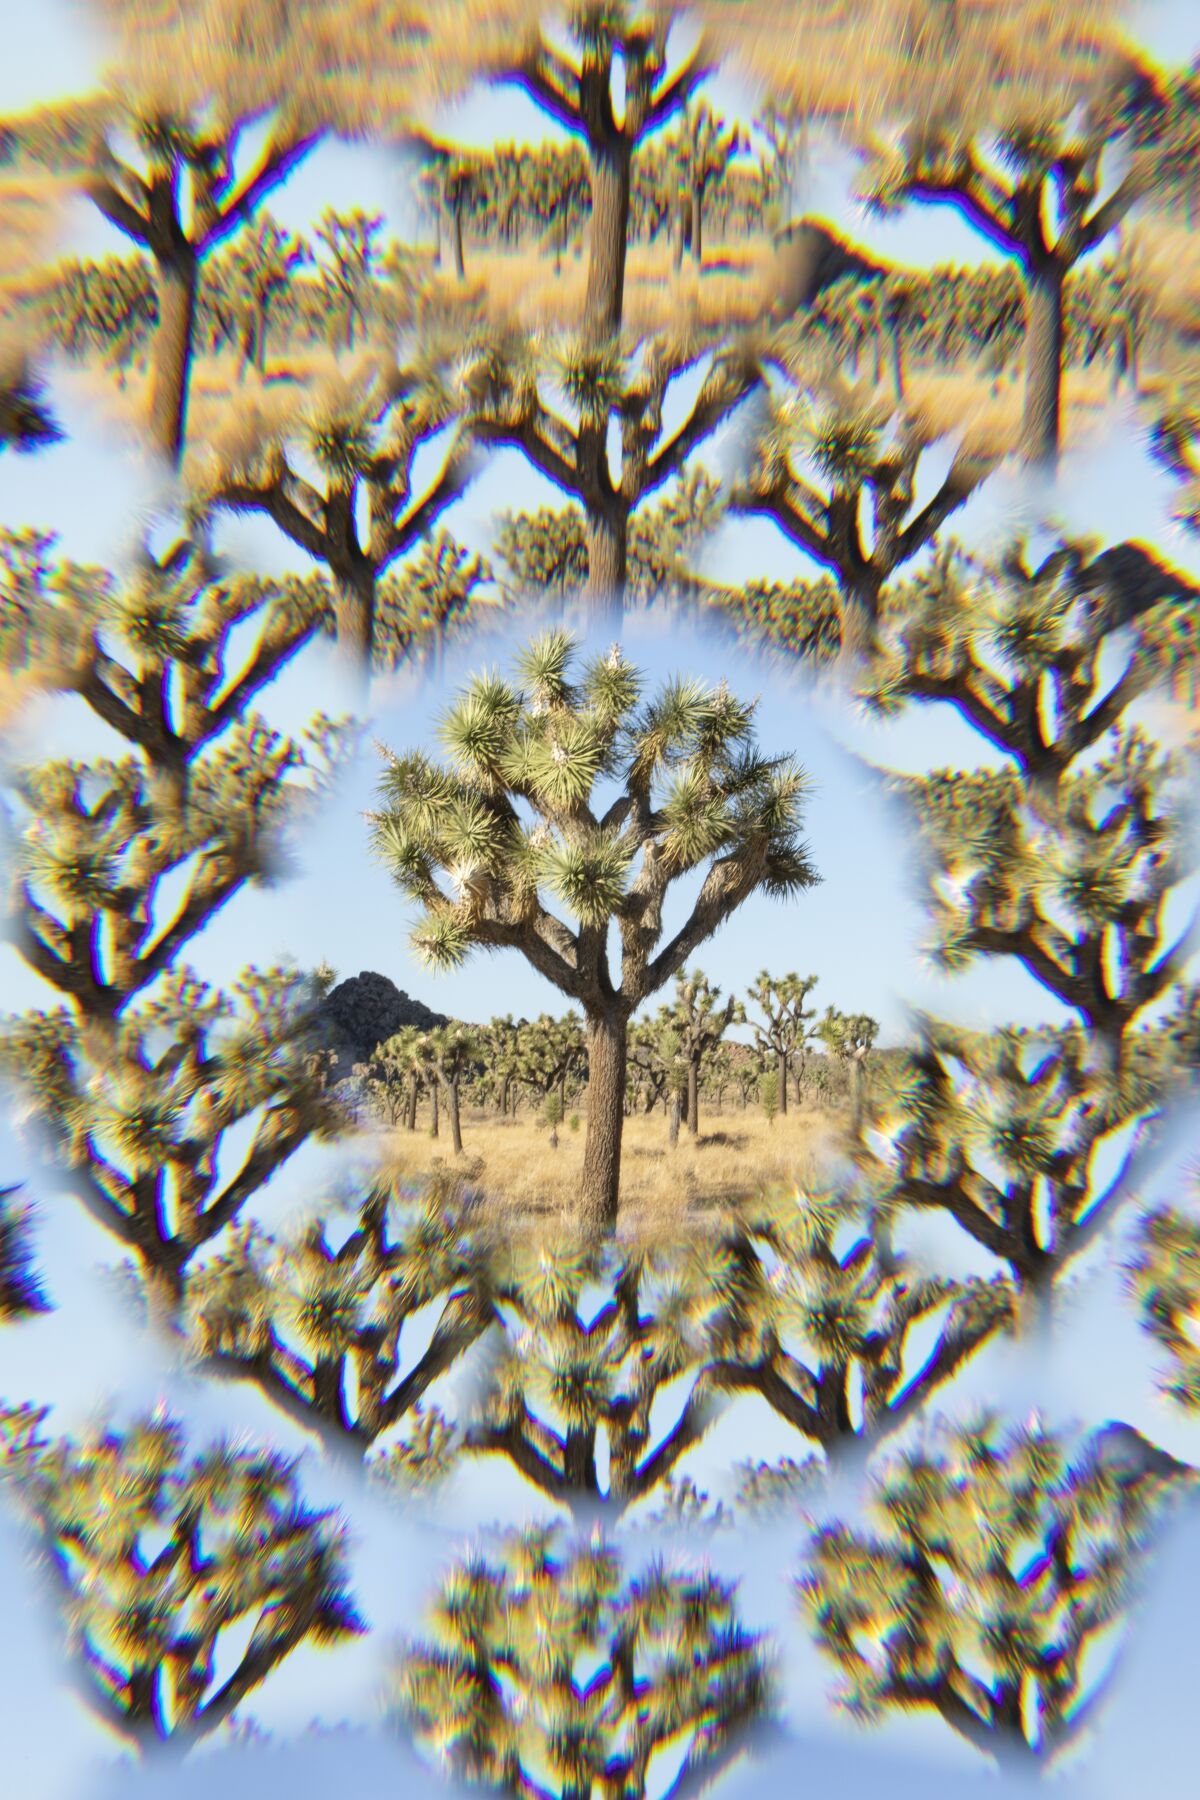 A Joshua tree photographed using a kaleidoscope lens filter